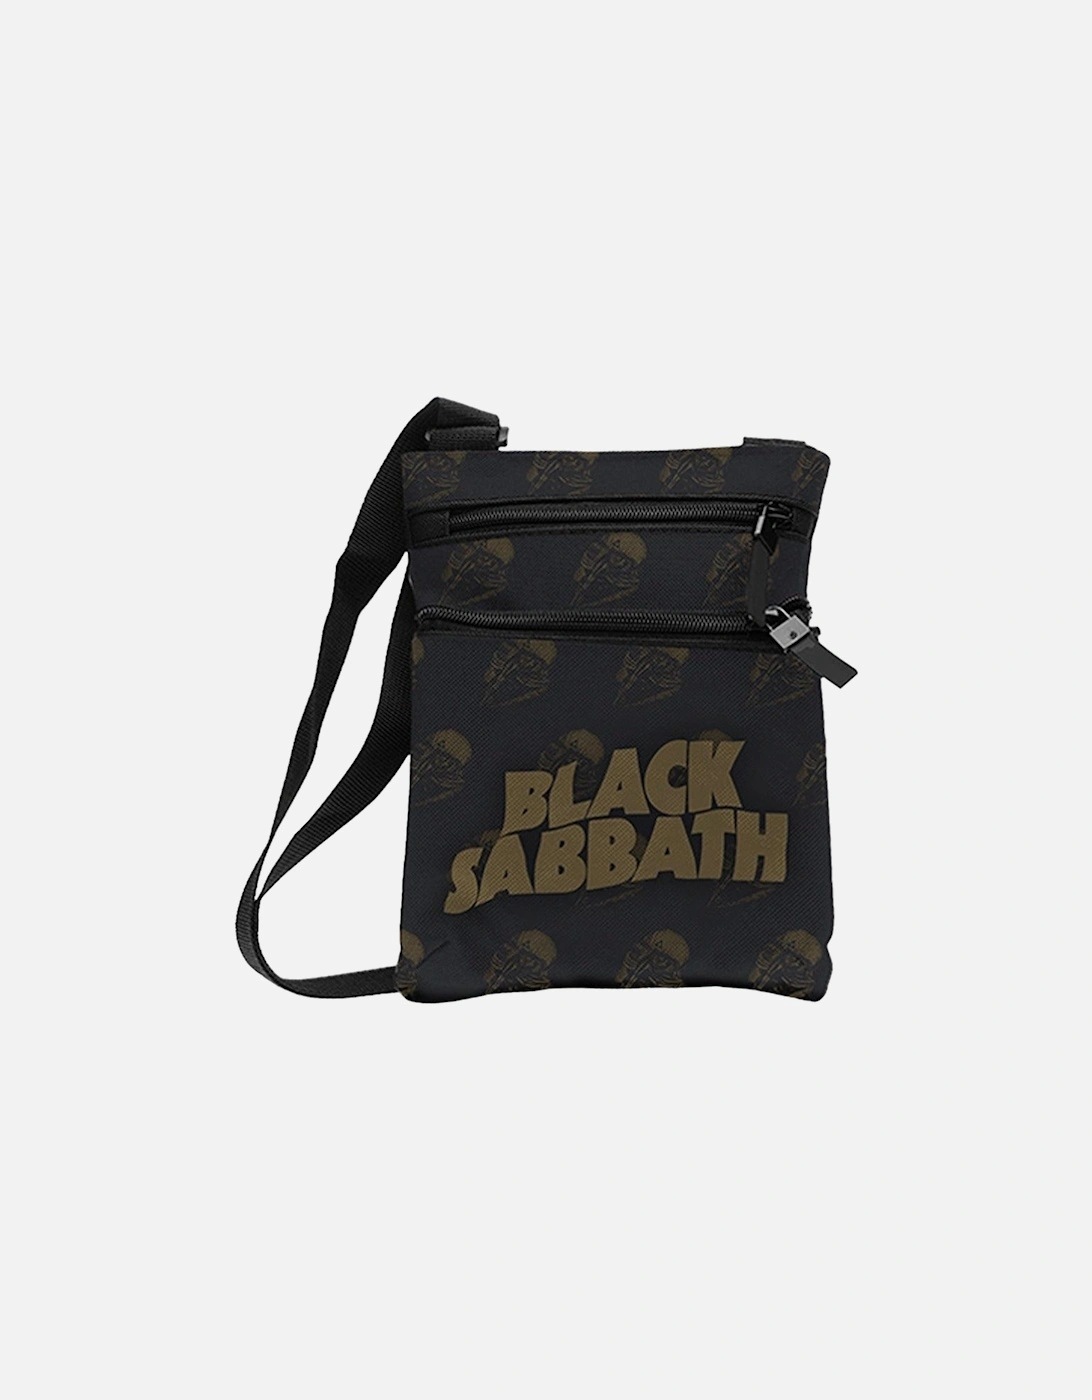 Never Say Die Repeated Black Sabbath Crossbody Bag, 2 of 1